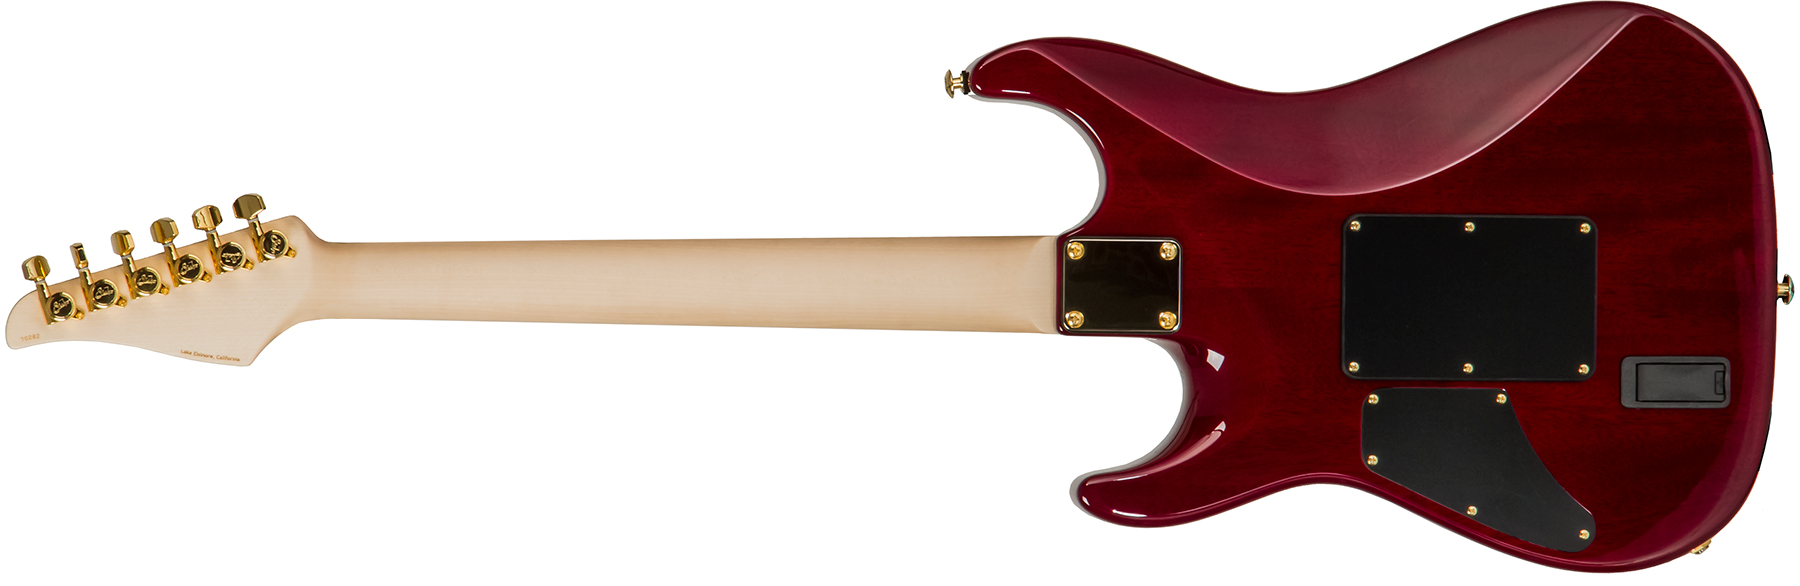 Suhr Standard Legacy 01-ltd-0030 Hss Emg Fr Rw #70282 - Aged Cherry Burst - E-Gitarre in Str-Form - Variation 1